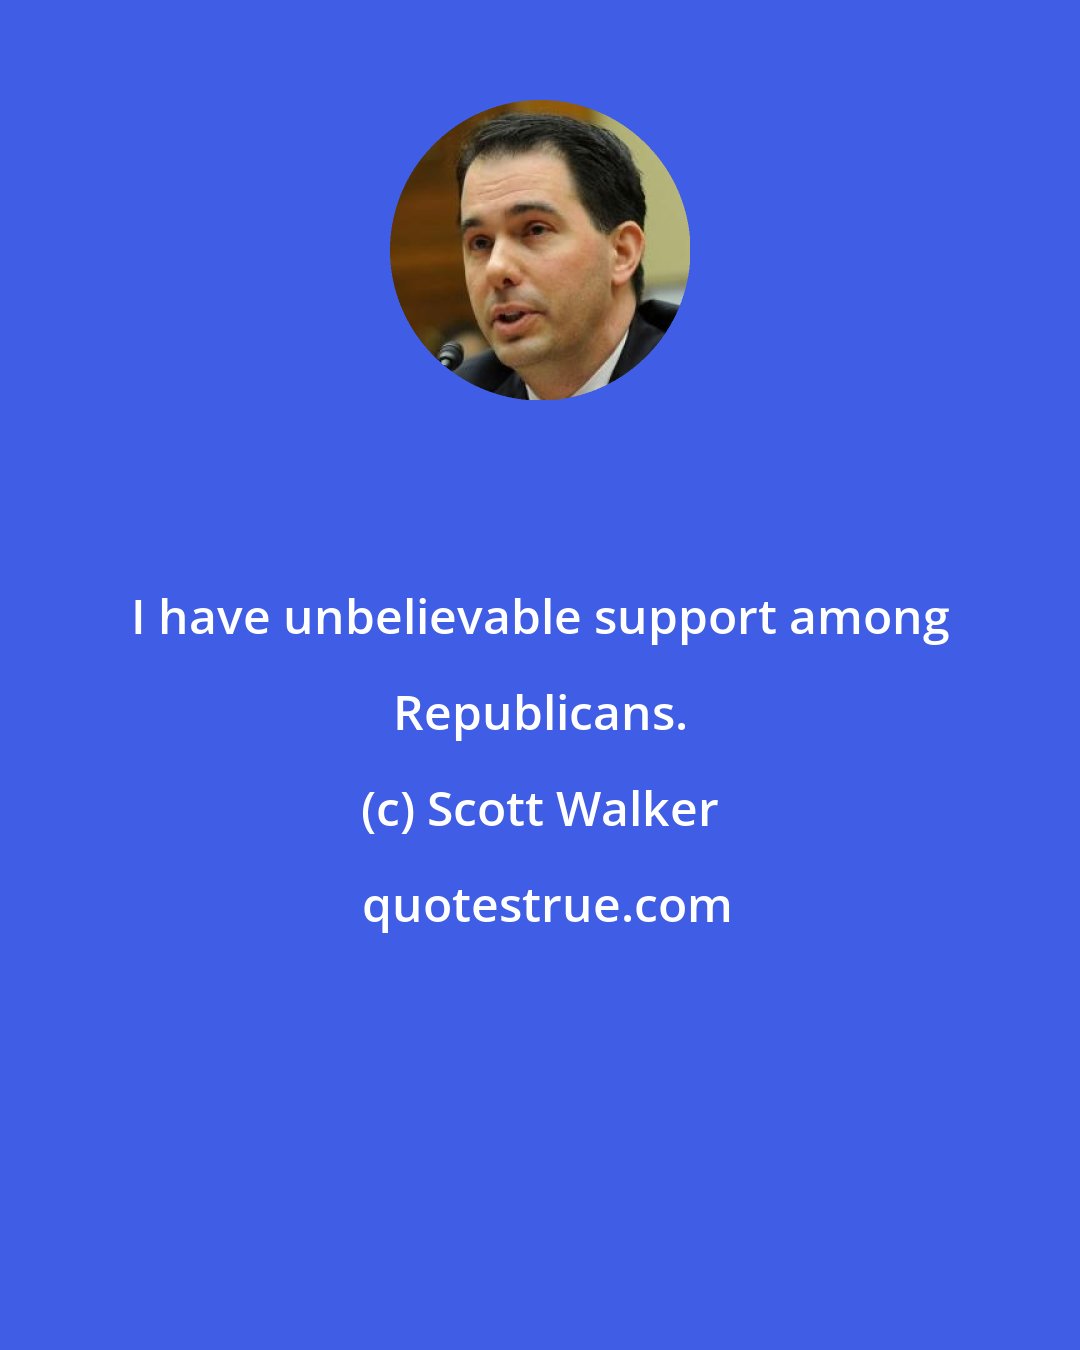 Scott Walker: I have unbelievable support among Republicans.